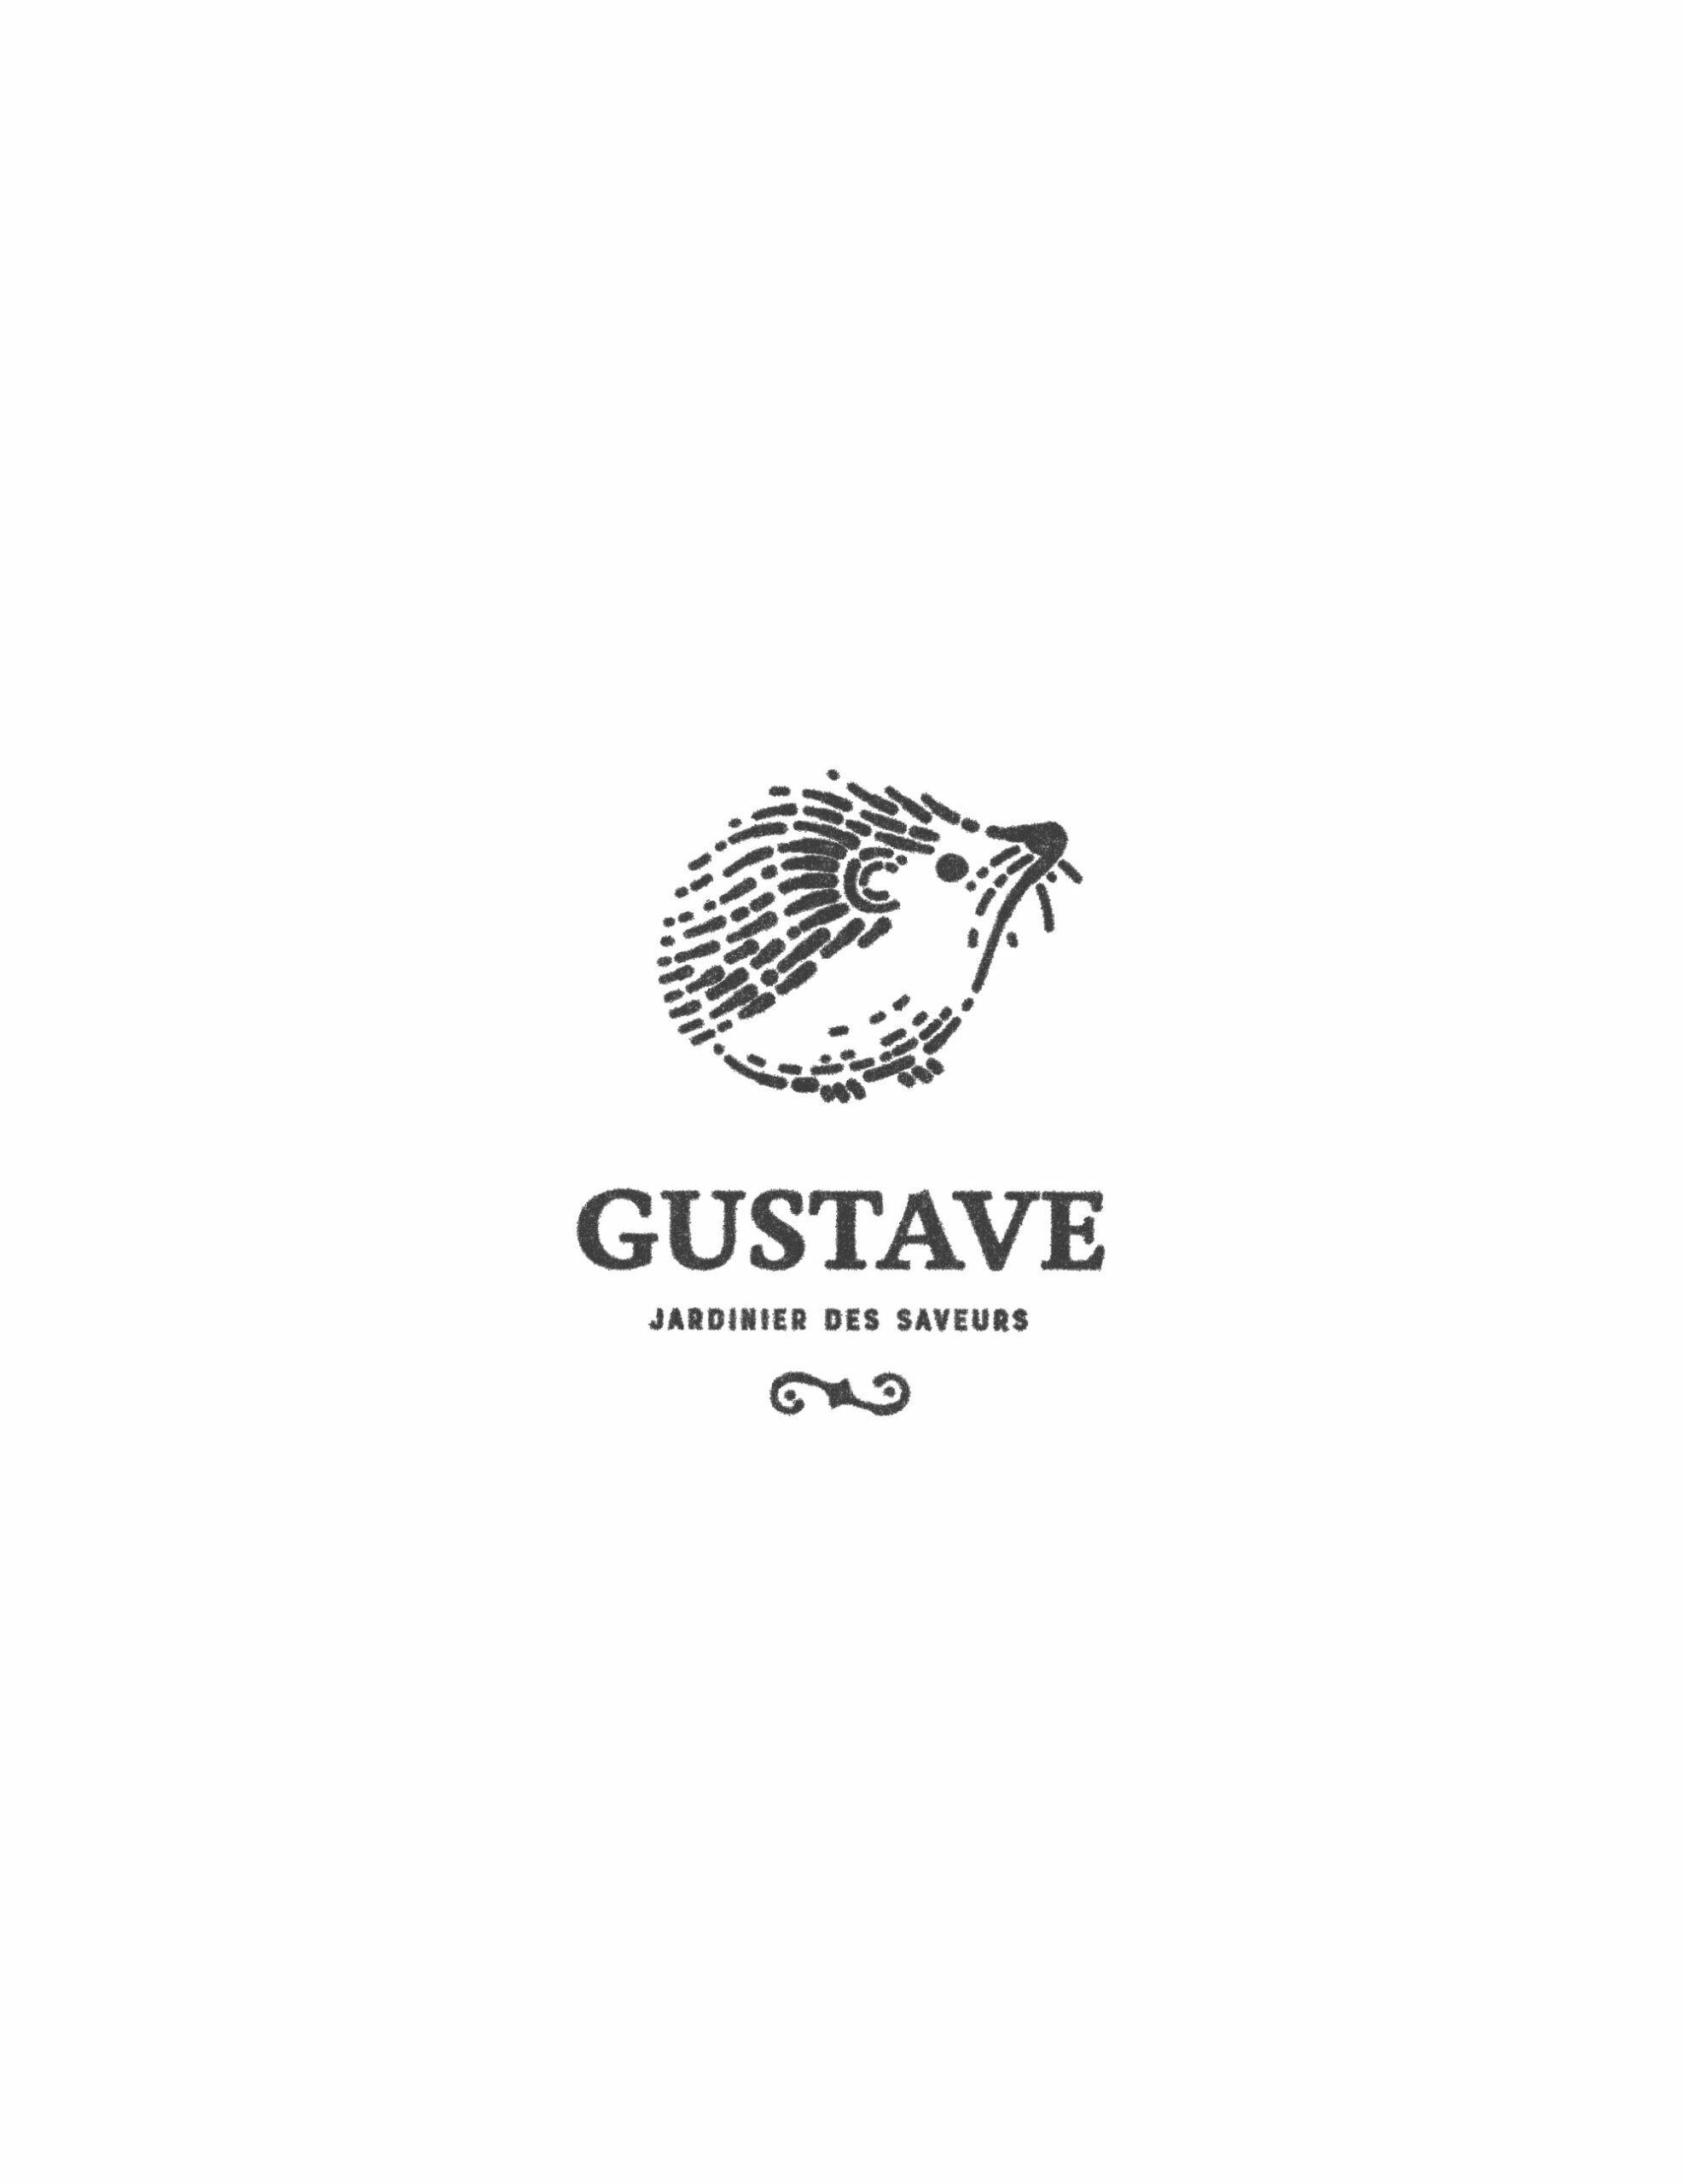 gustave_logo